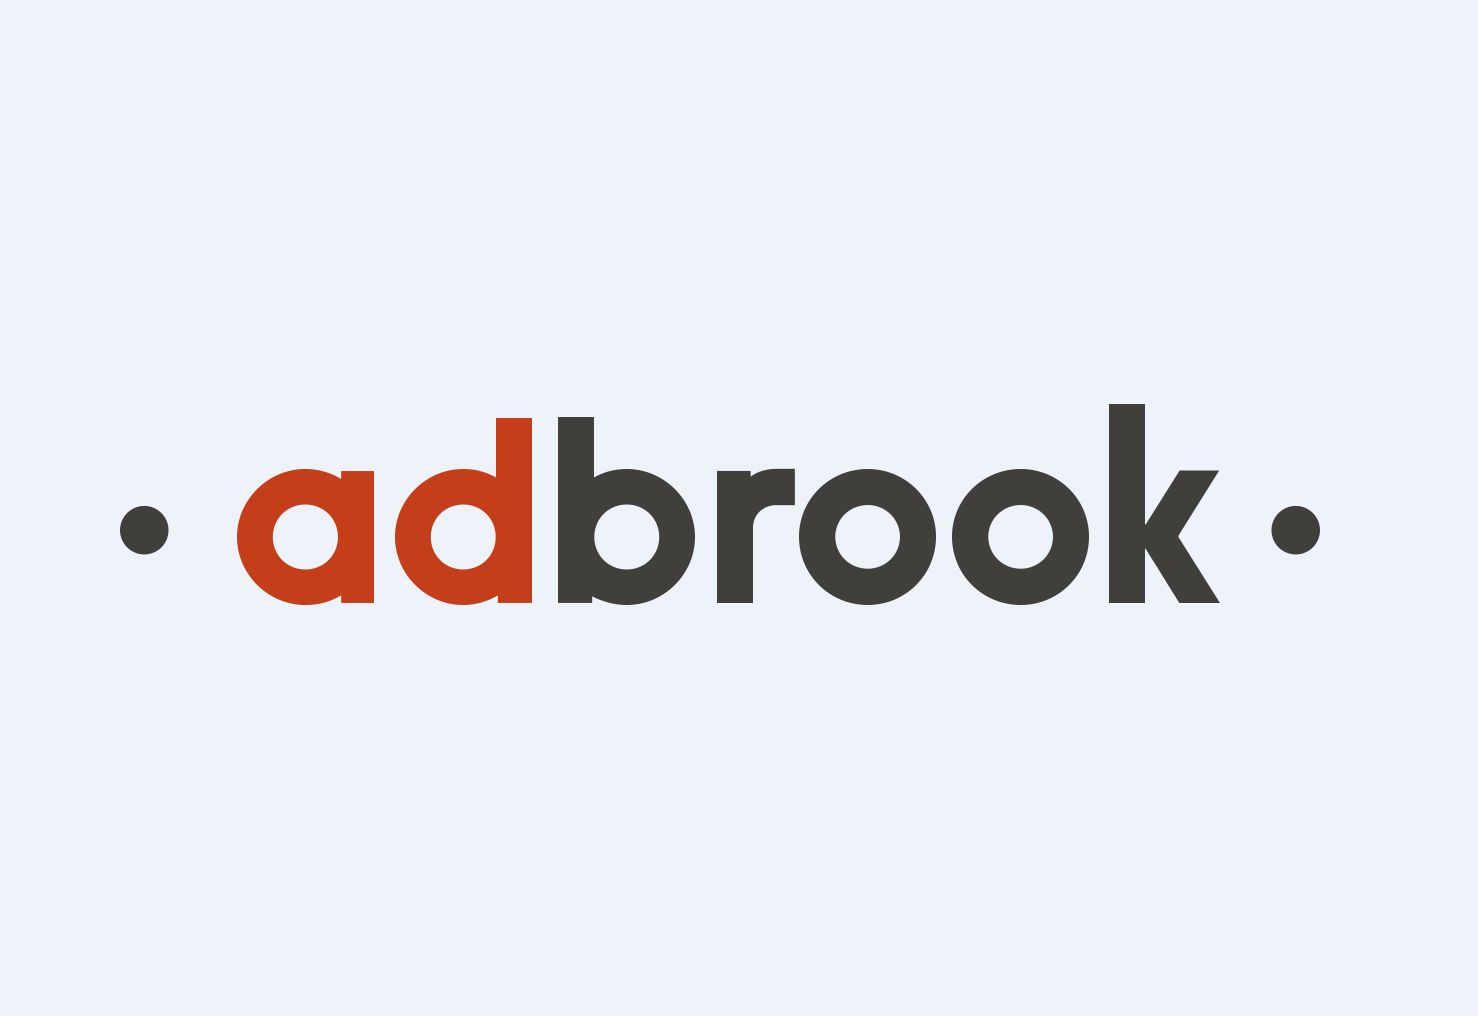 AdBrook